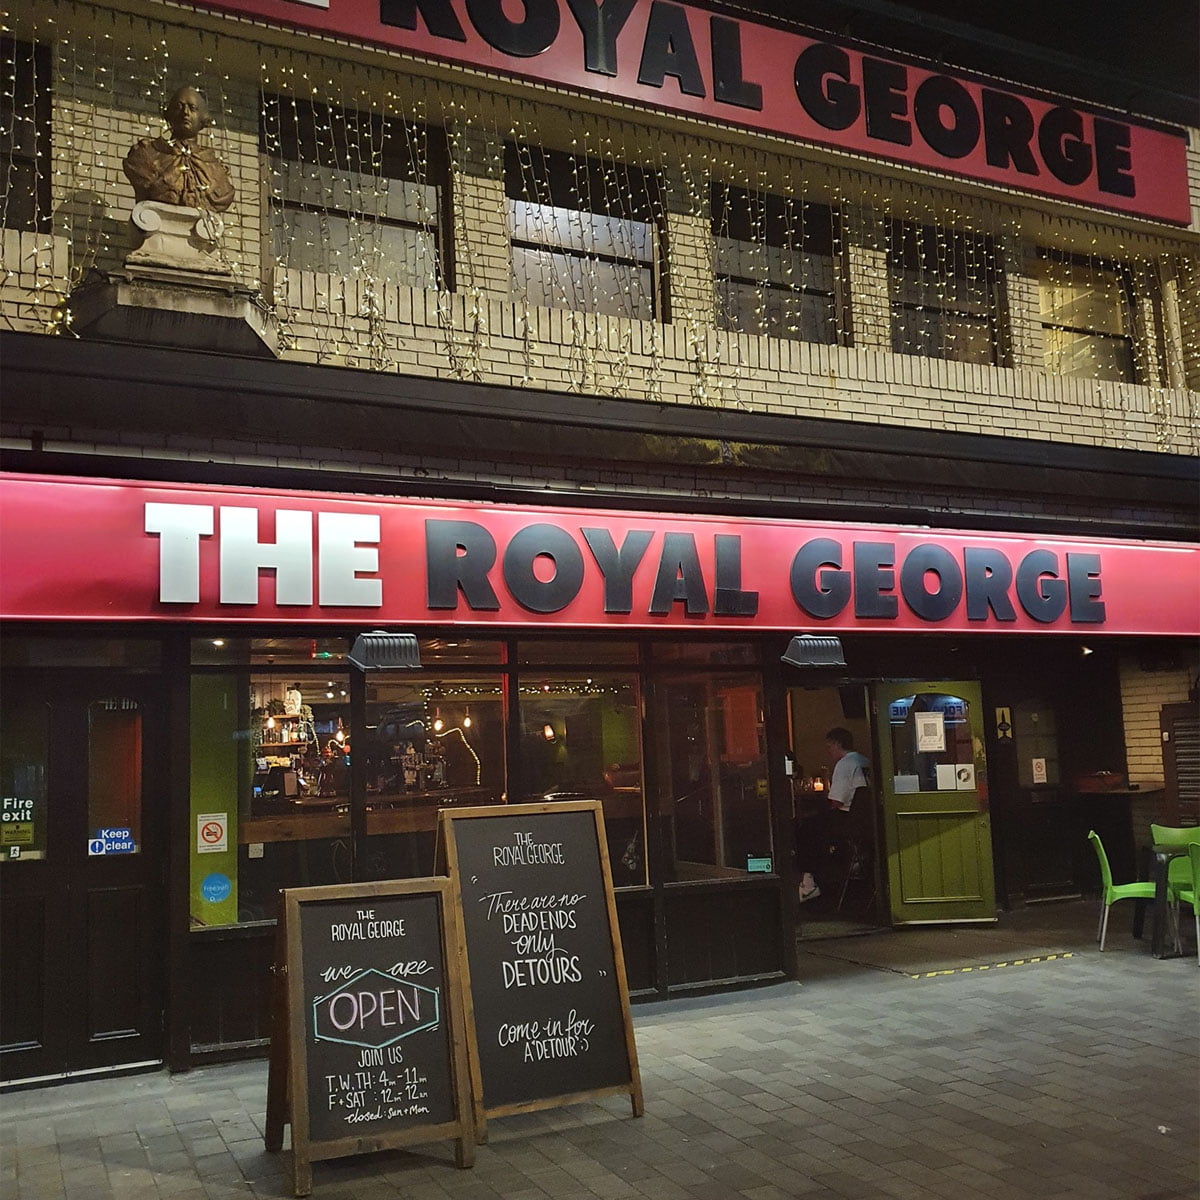 The Royal George